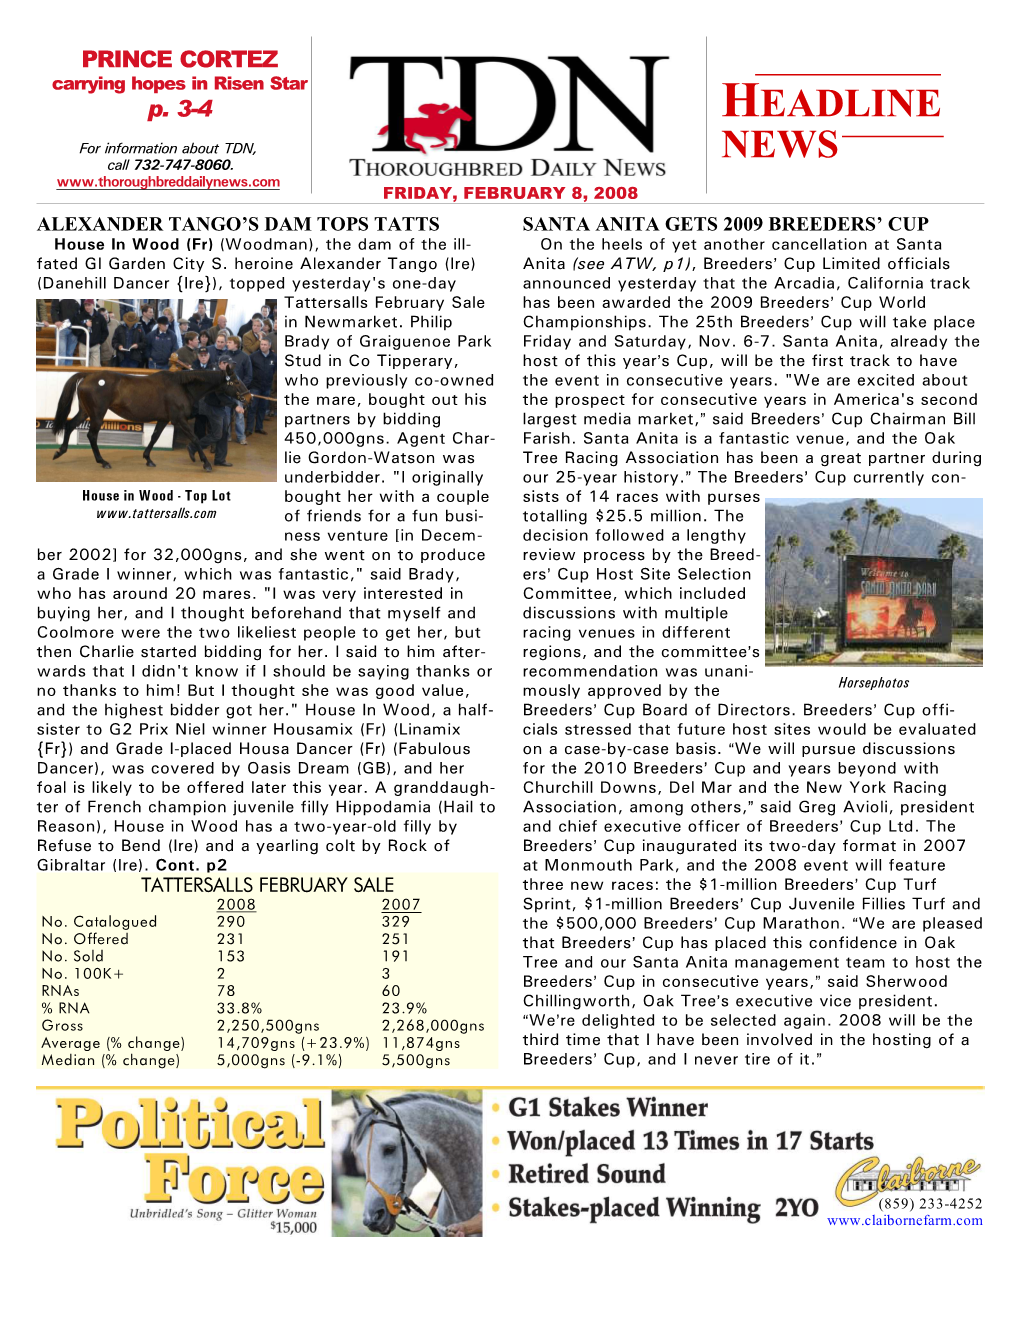 HEADLINE NEWS • 2/8/08 • PAGE 2 of 4